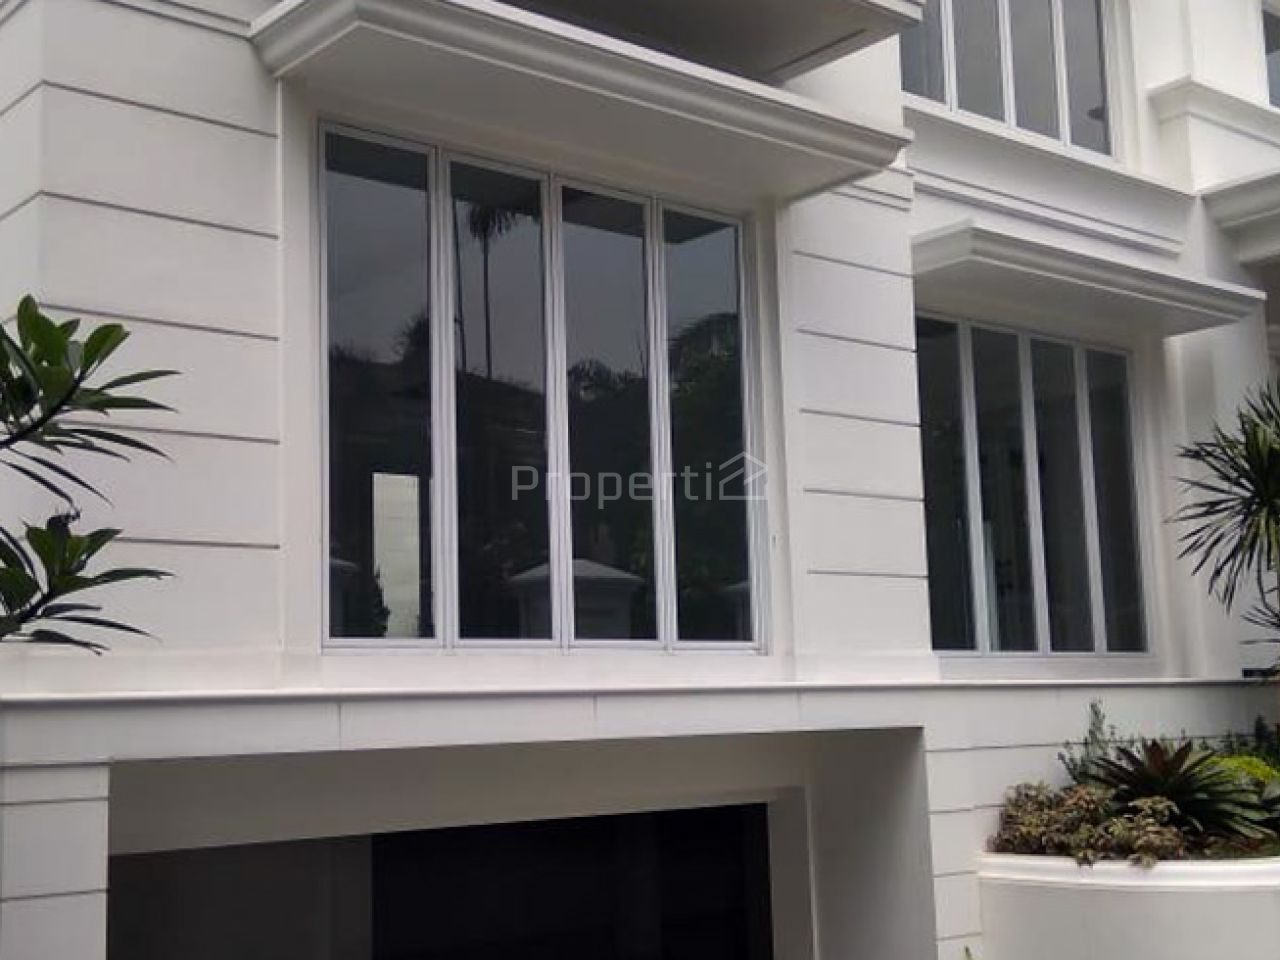 New Super Luxury House with Hook Position in Pondok Indah, DKI Jakarta